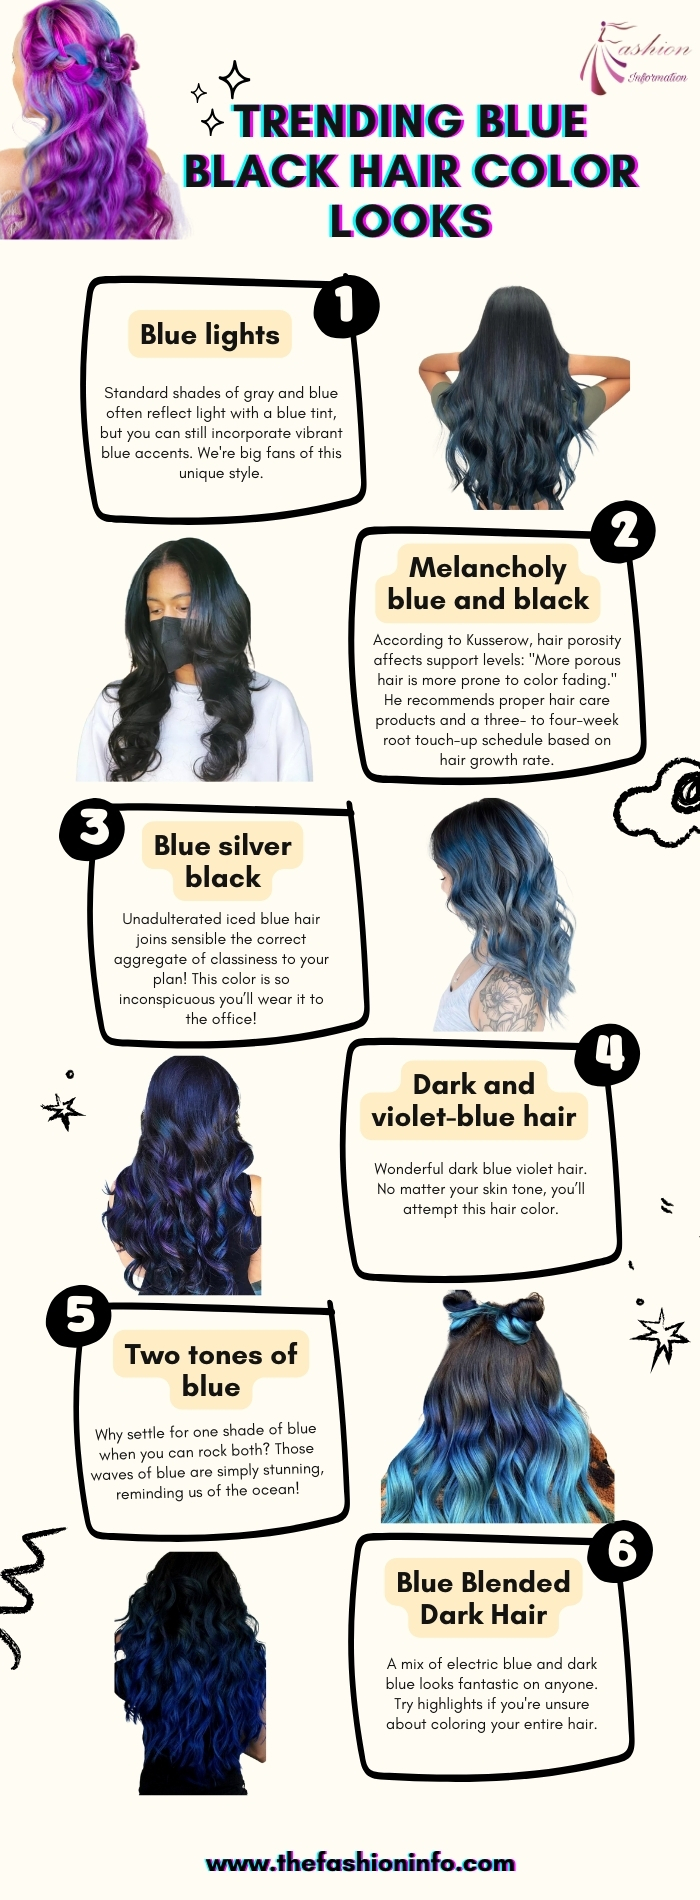 Trending Blue Black Hair Color Looks